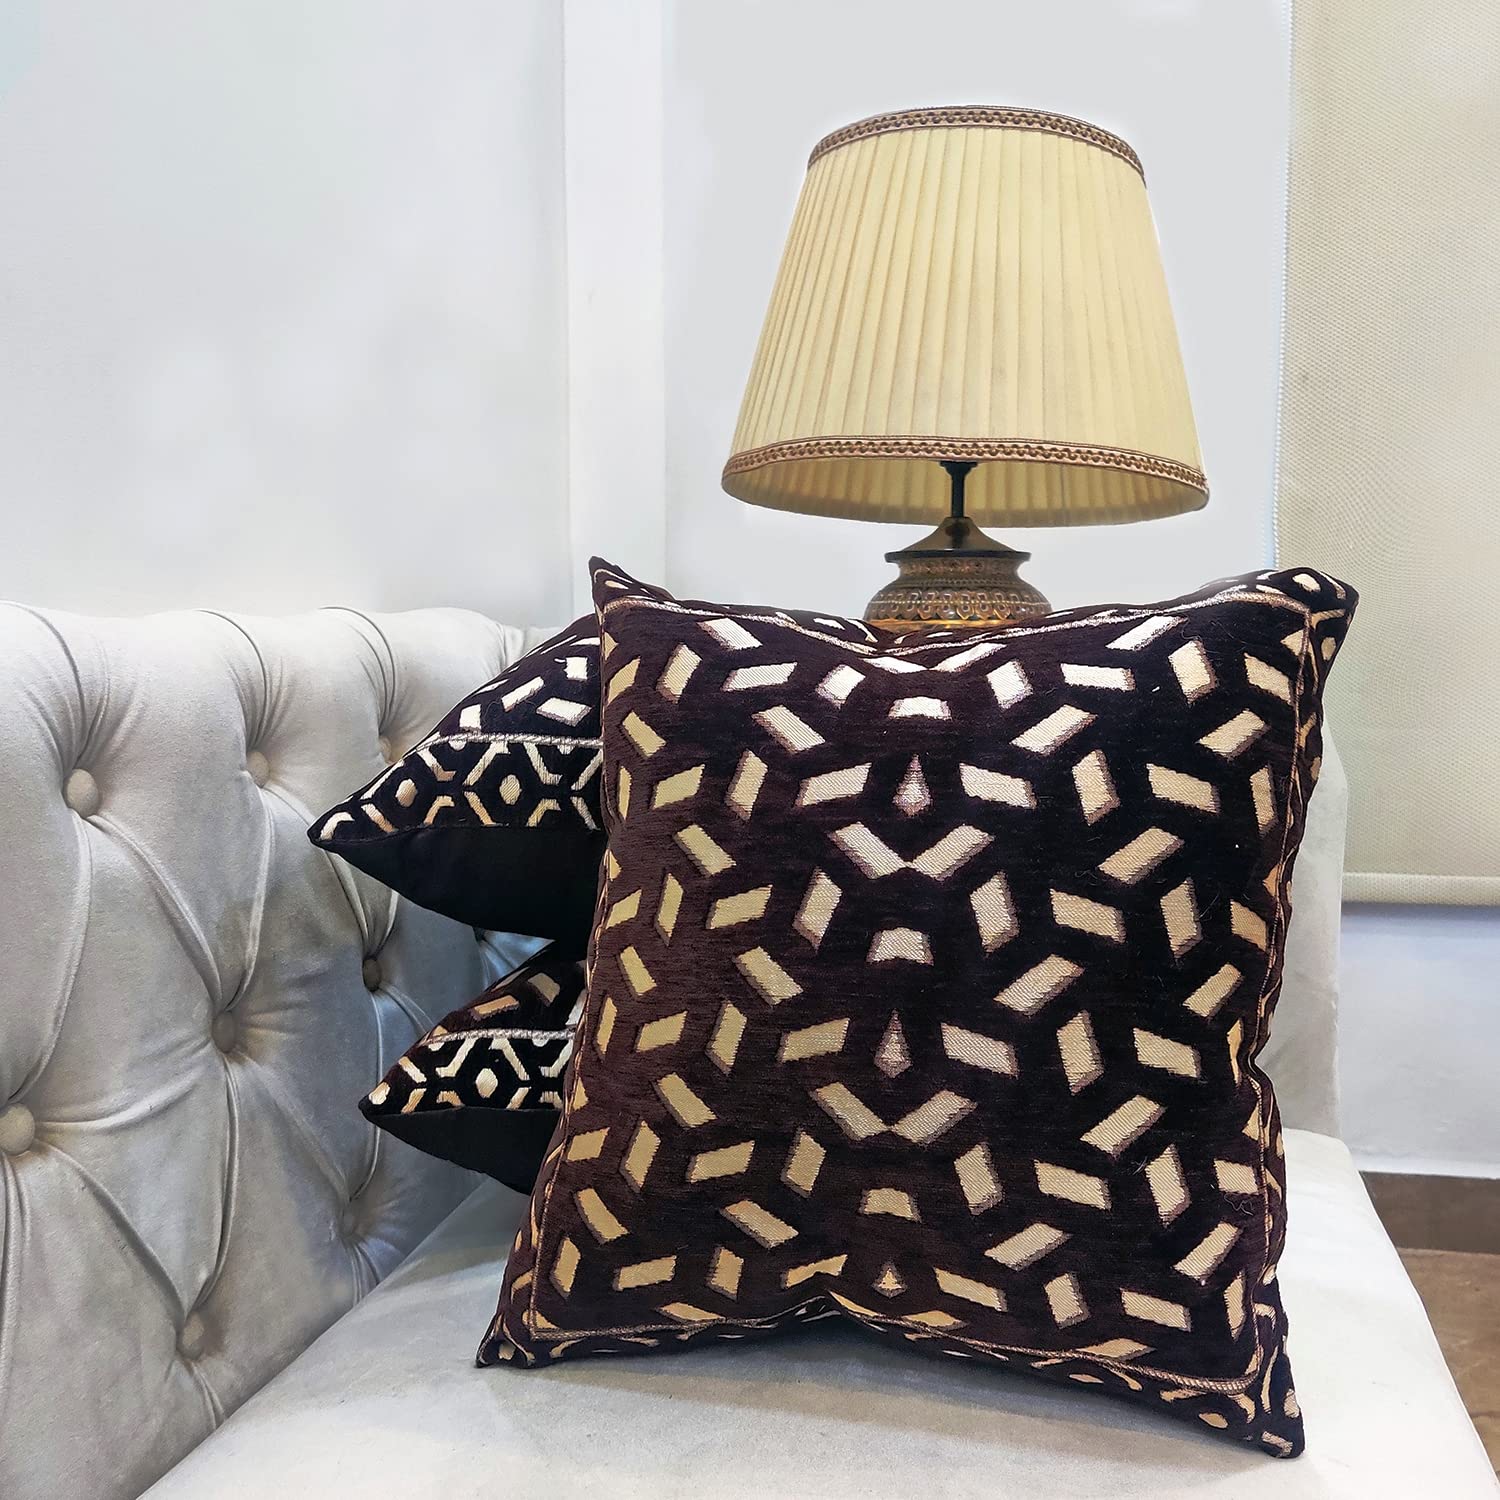 Black Damask Geometric Woven Zipper Square Cushion Covers (16x16 inch or 40 x 40 cm) Set of 3